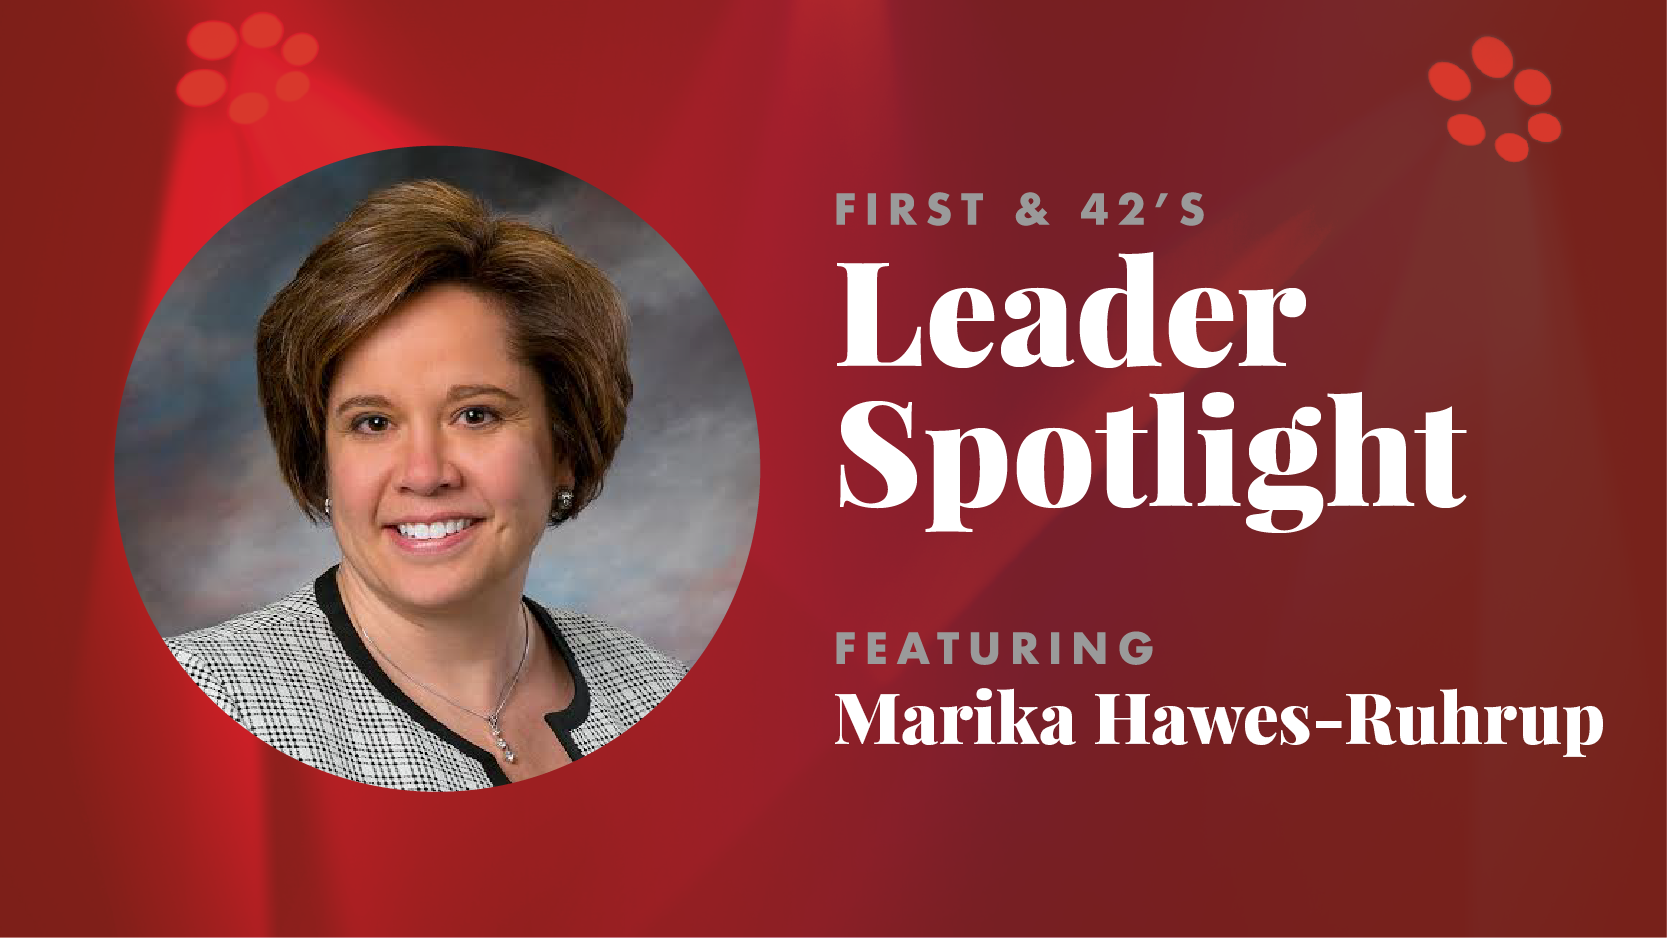 Leader Spotlight: All Eyes on Marika Hawes-Ruhrup - FIRST & 42